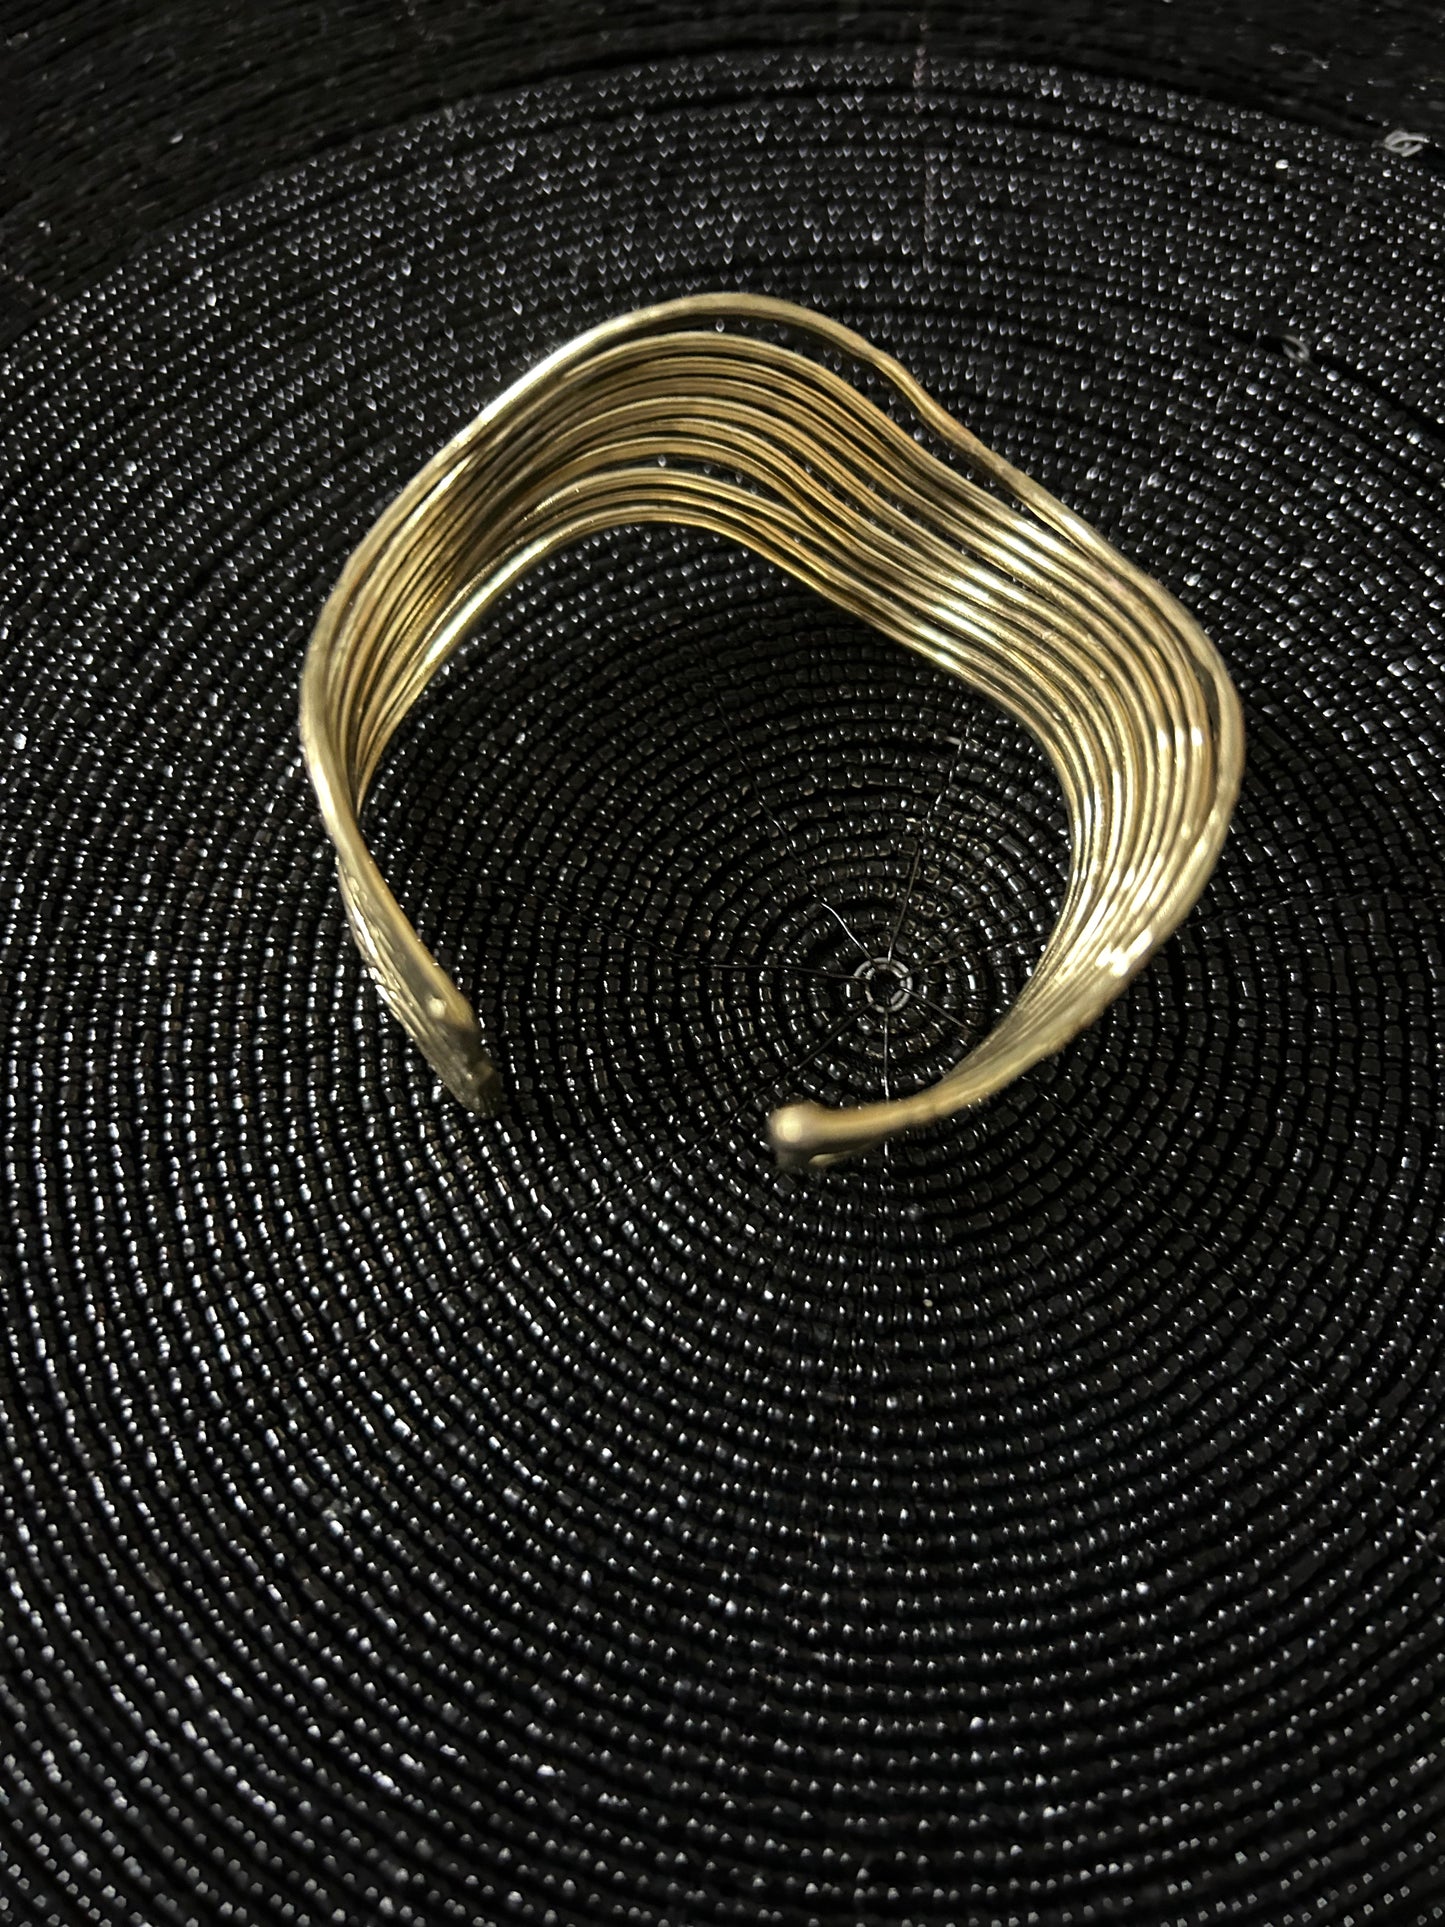 Brass bracelet with wavy thin spiral